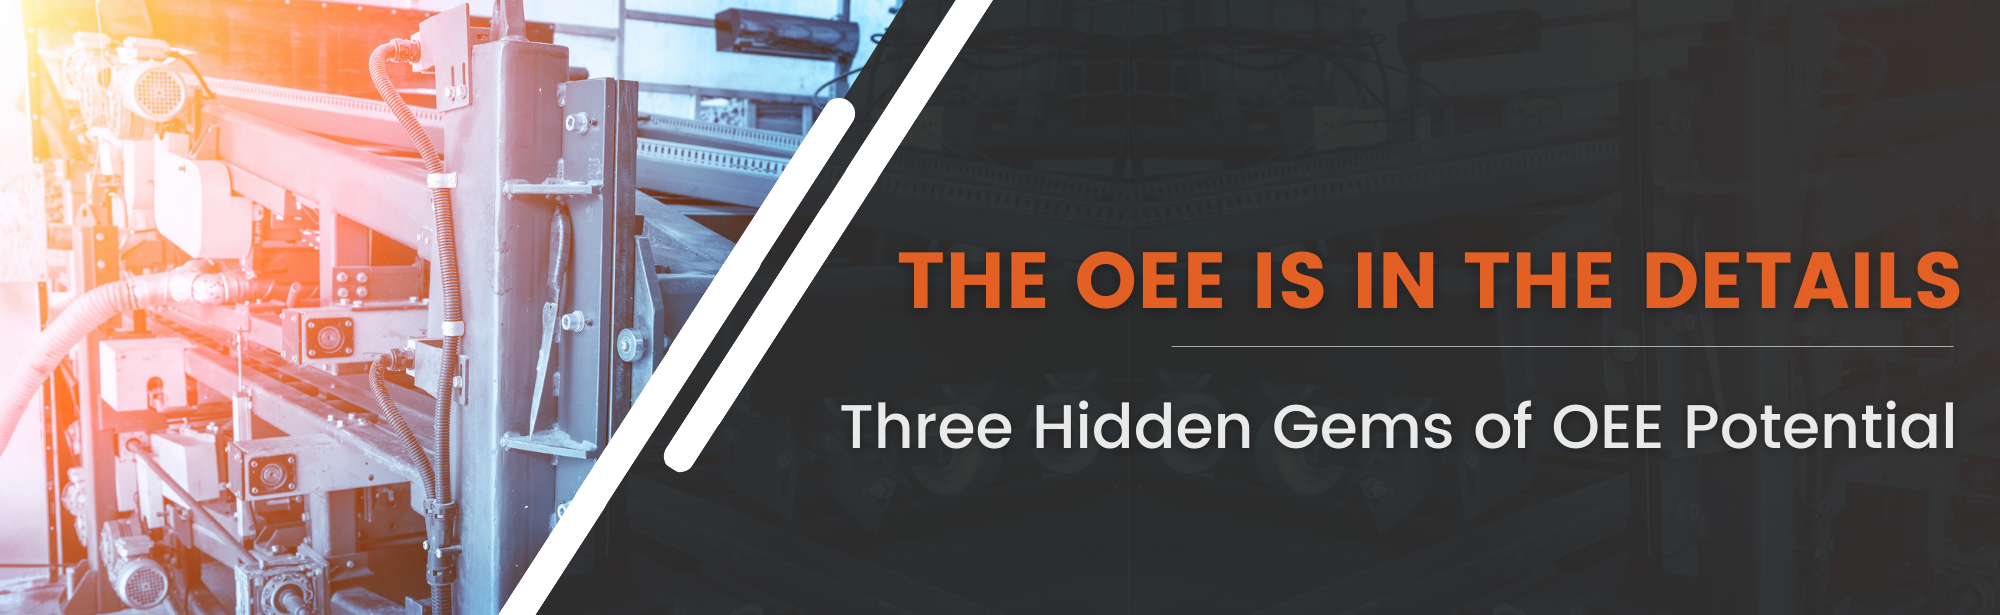 OEE 3 hidden gems blog post